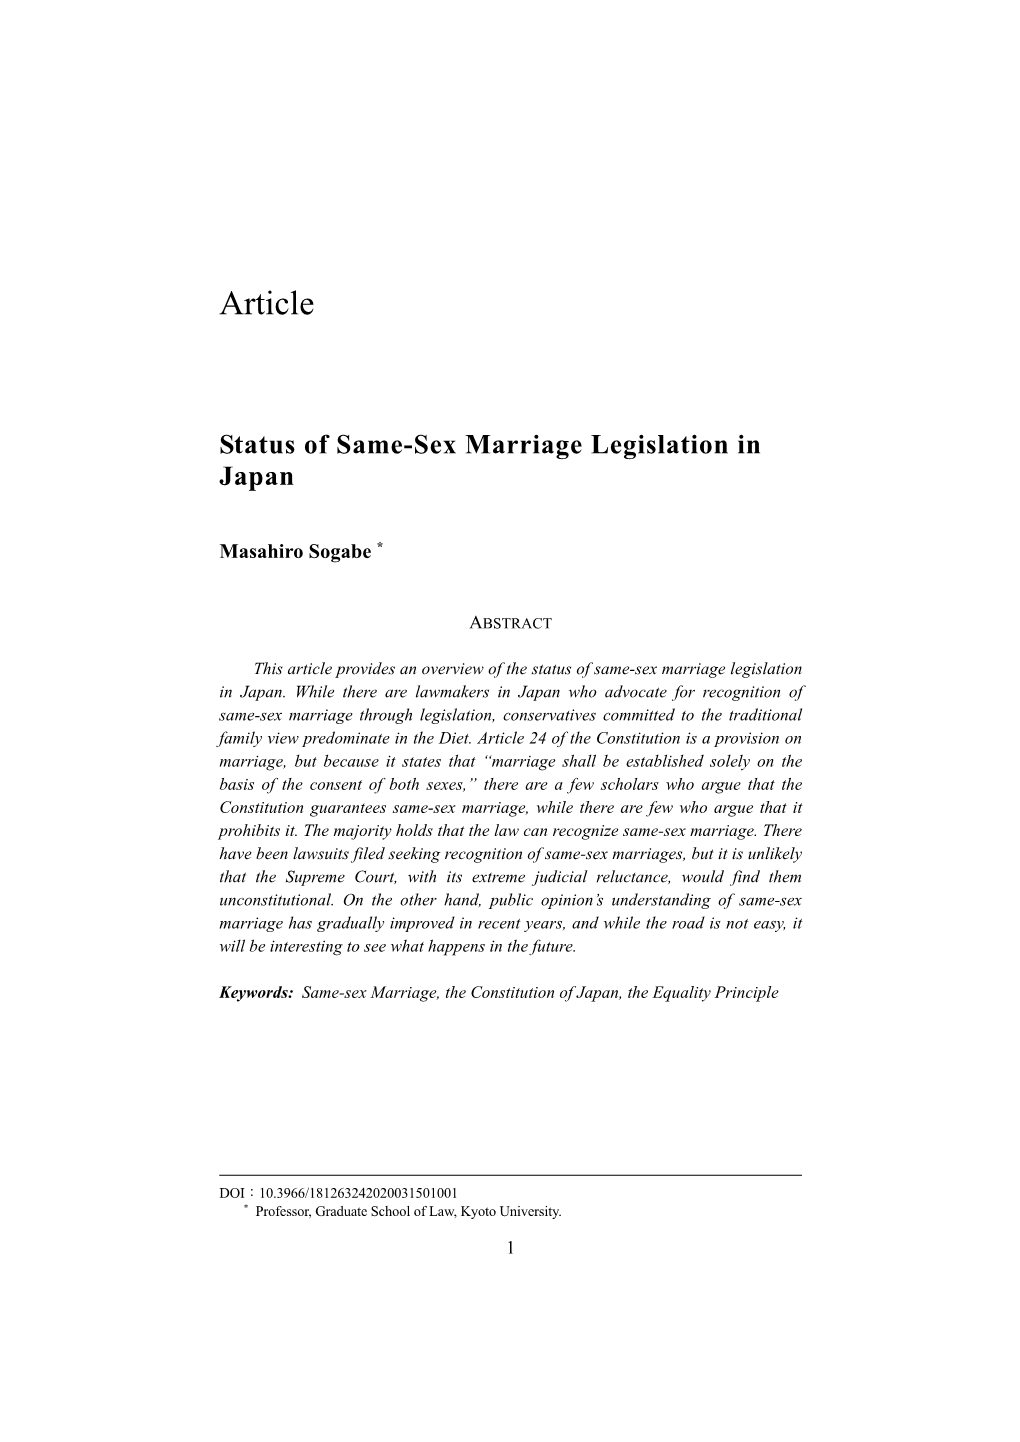 Status of Same-Sex Marriage Legislation in Japan